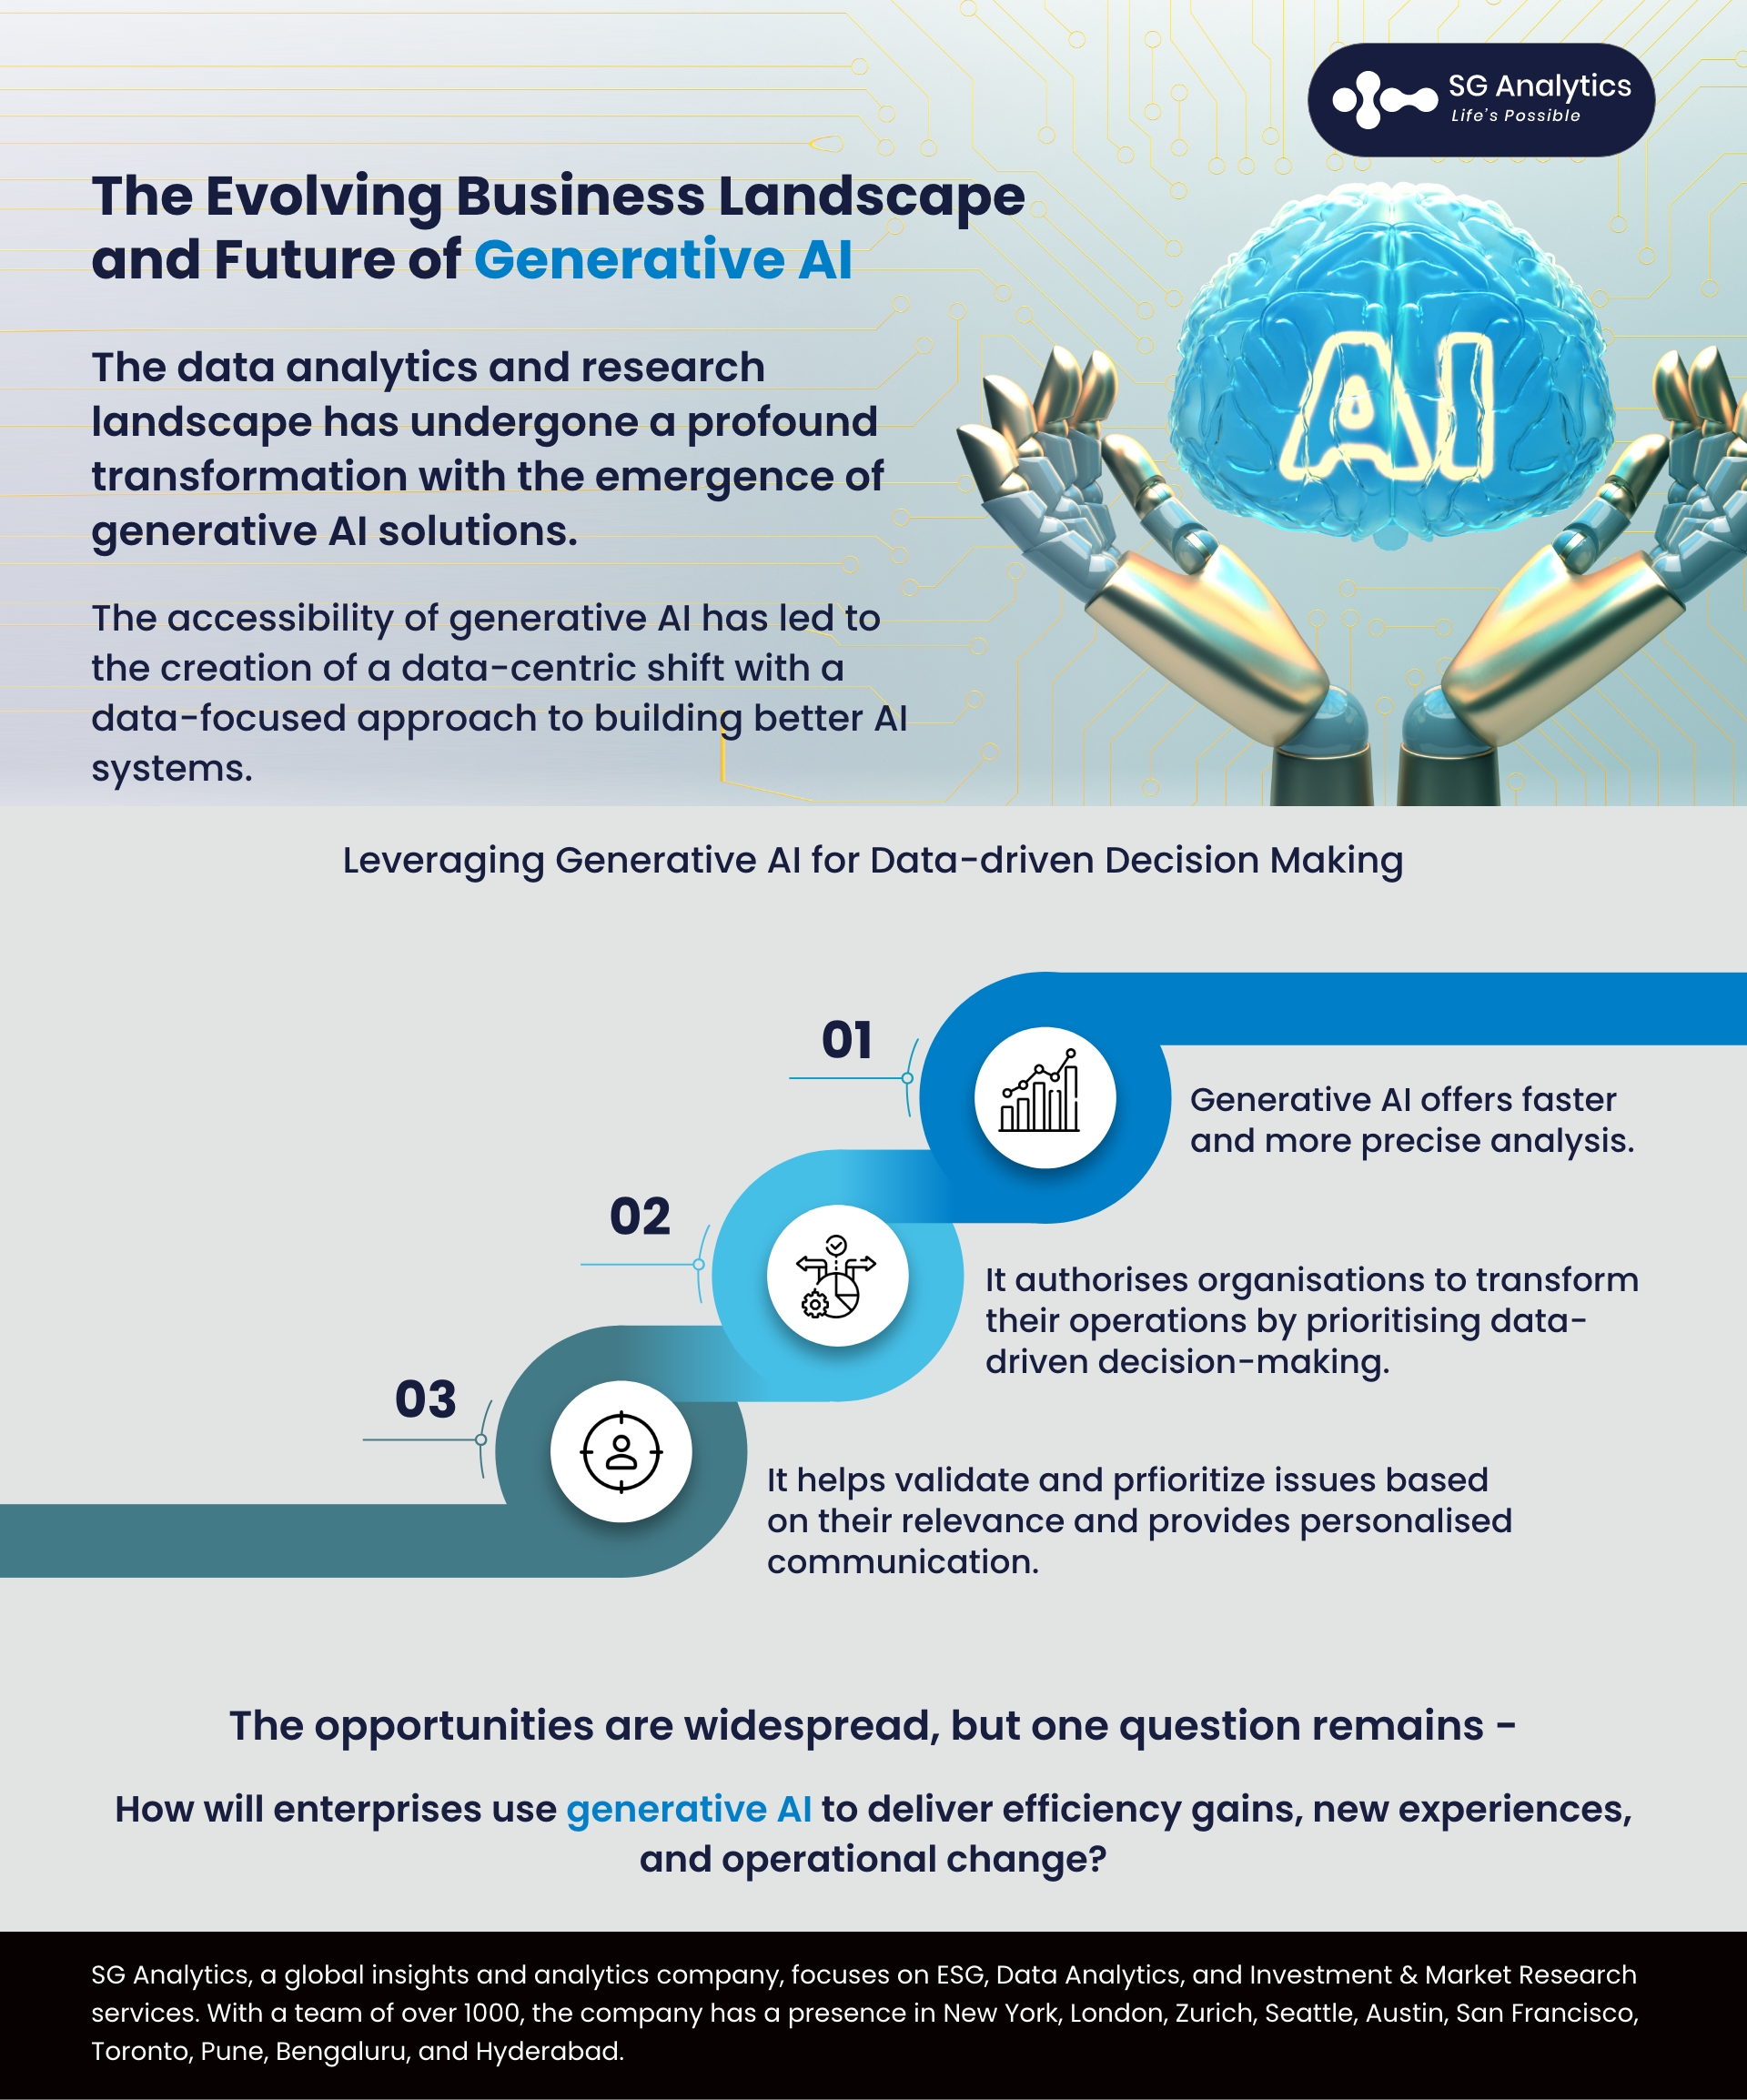 The Evolving Business Landscape and Future of Generative AI